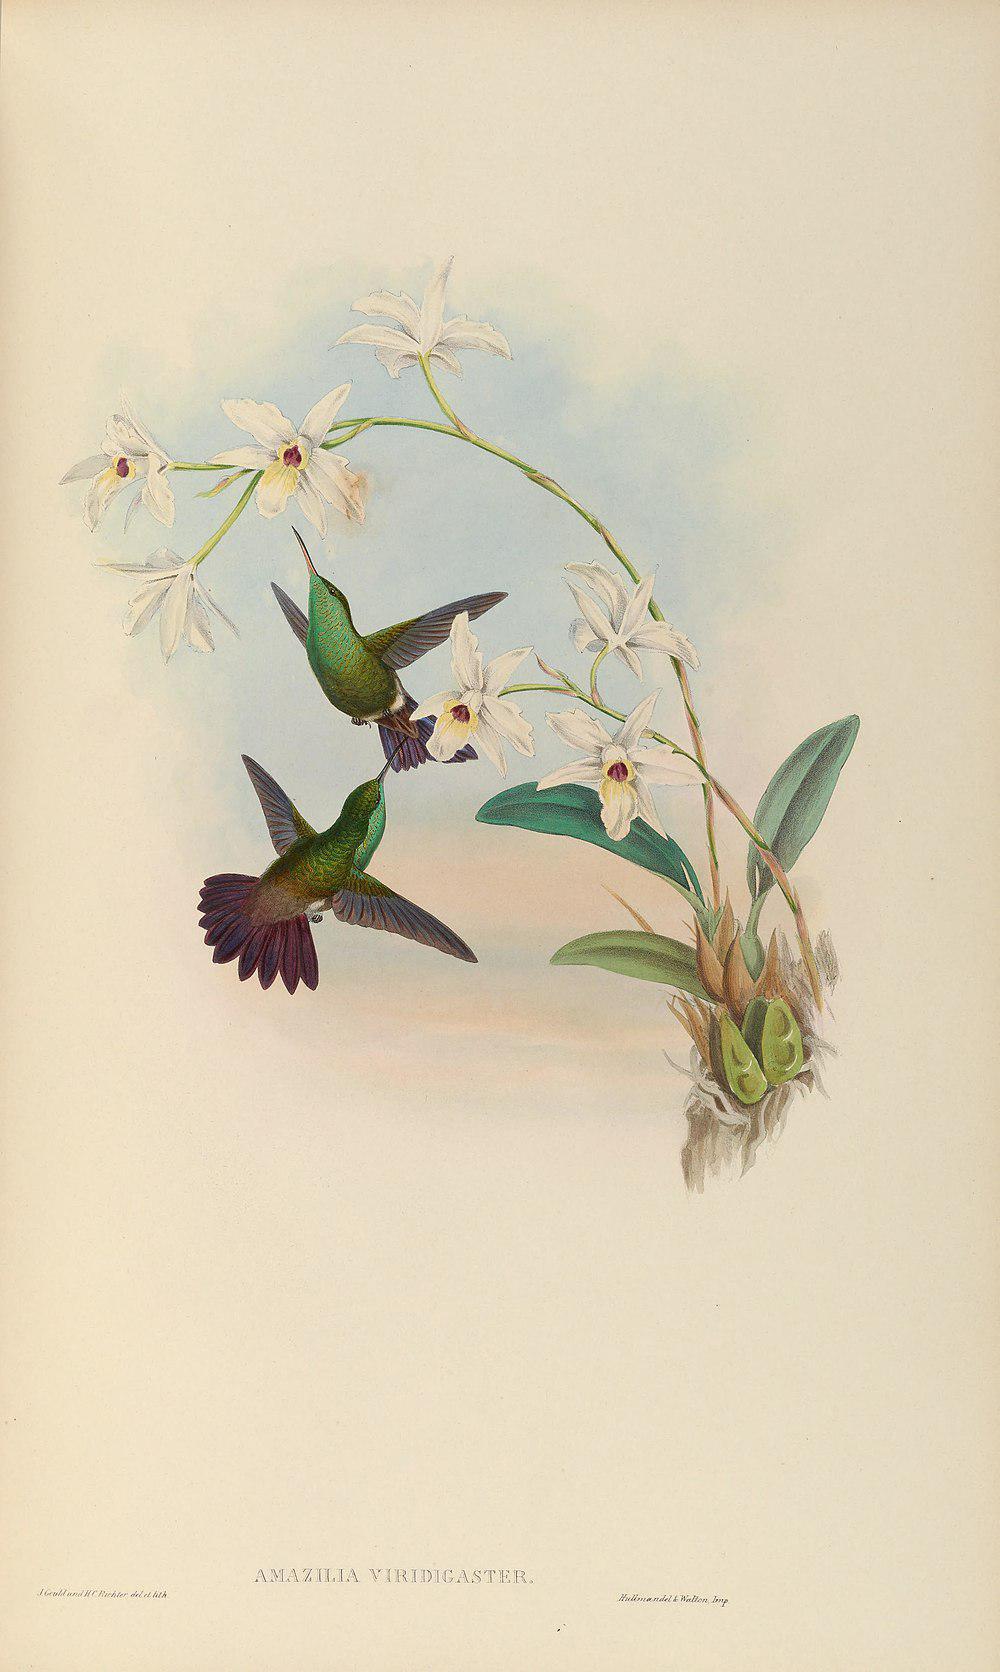 绿腹蜂鸟 / Green-bellied Hummingbird / Saucerottia viridigaster